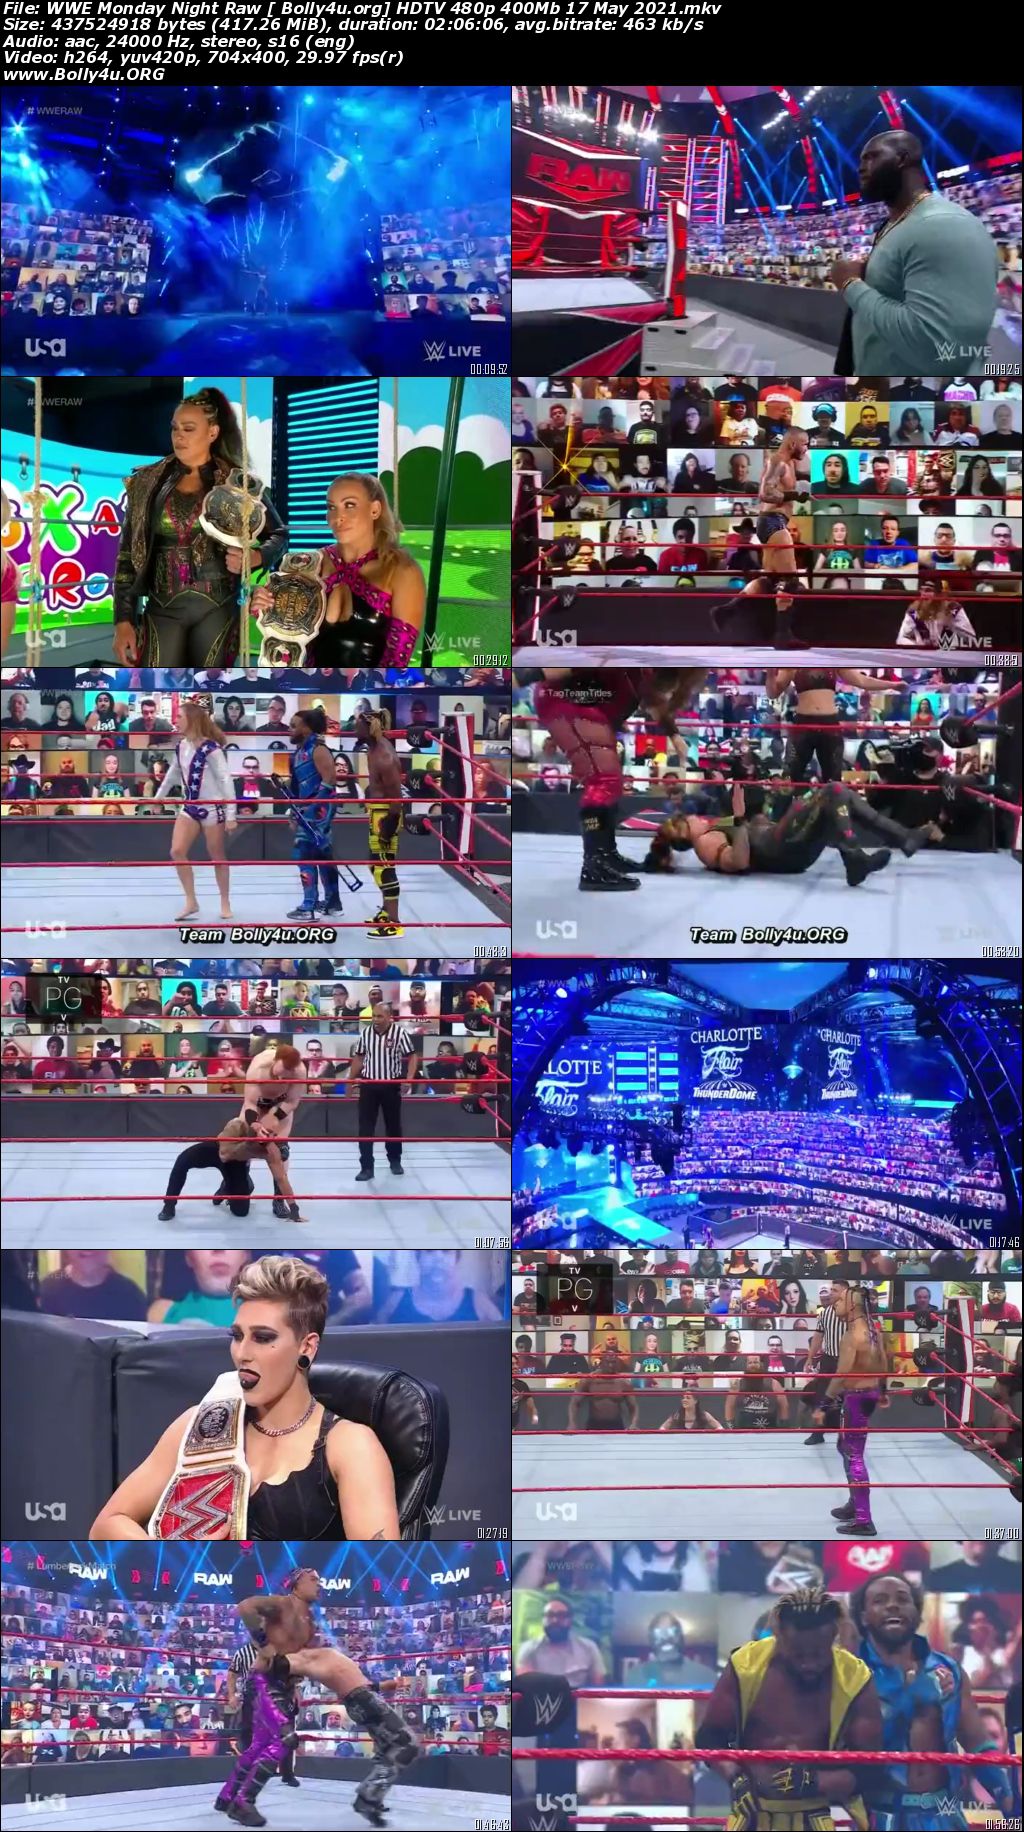 WWE Monday Night Raw HDTV 480p 400Mb 17 May 2021 Download